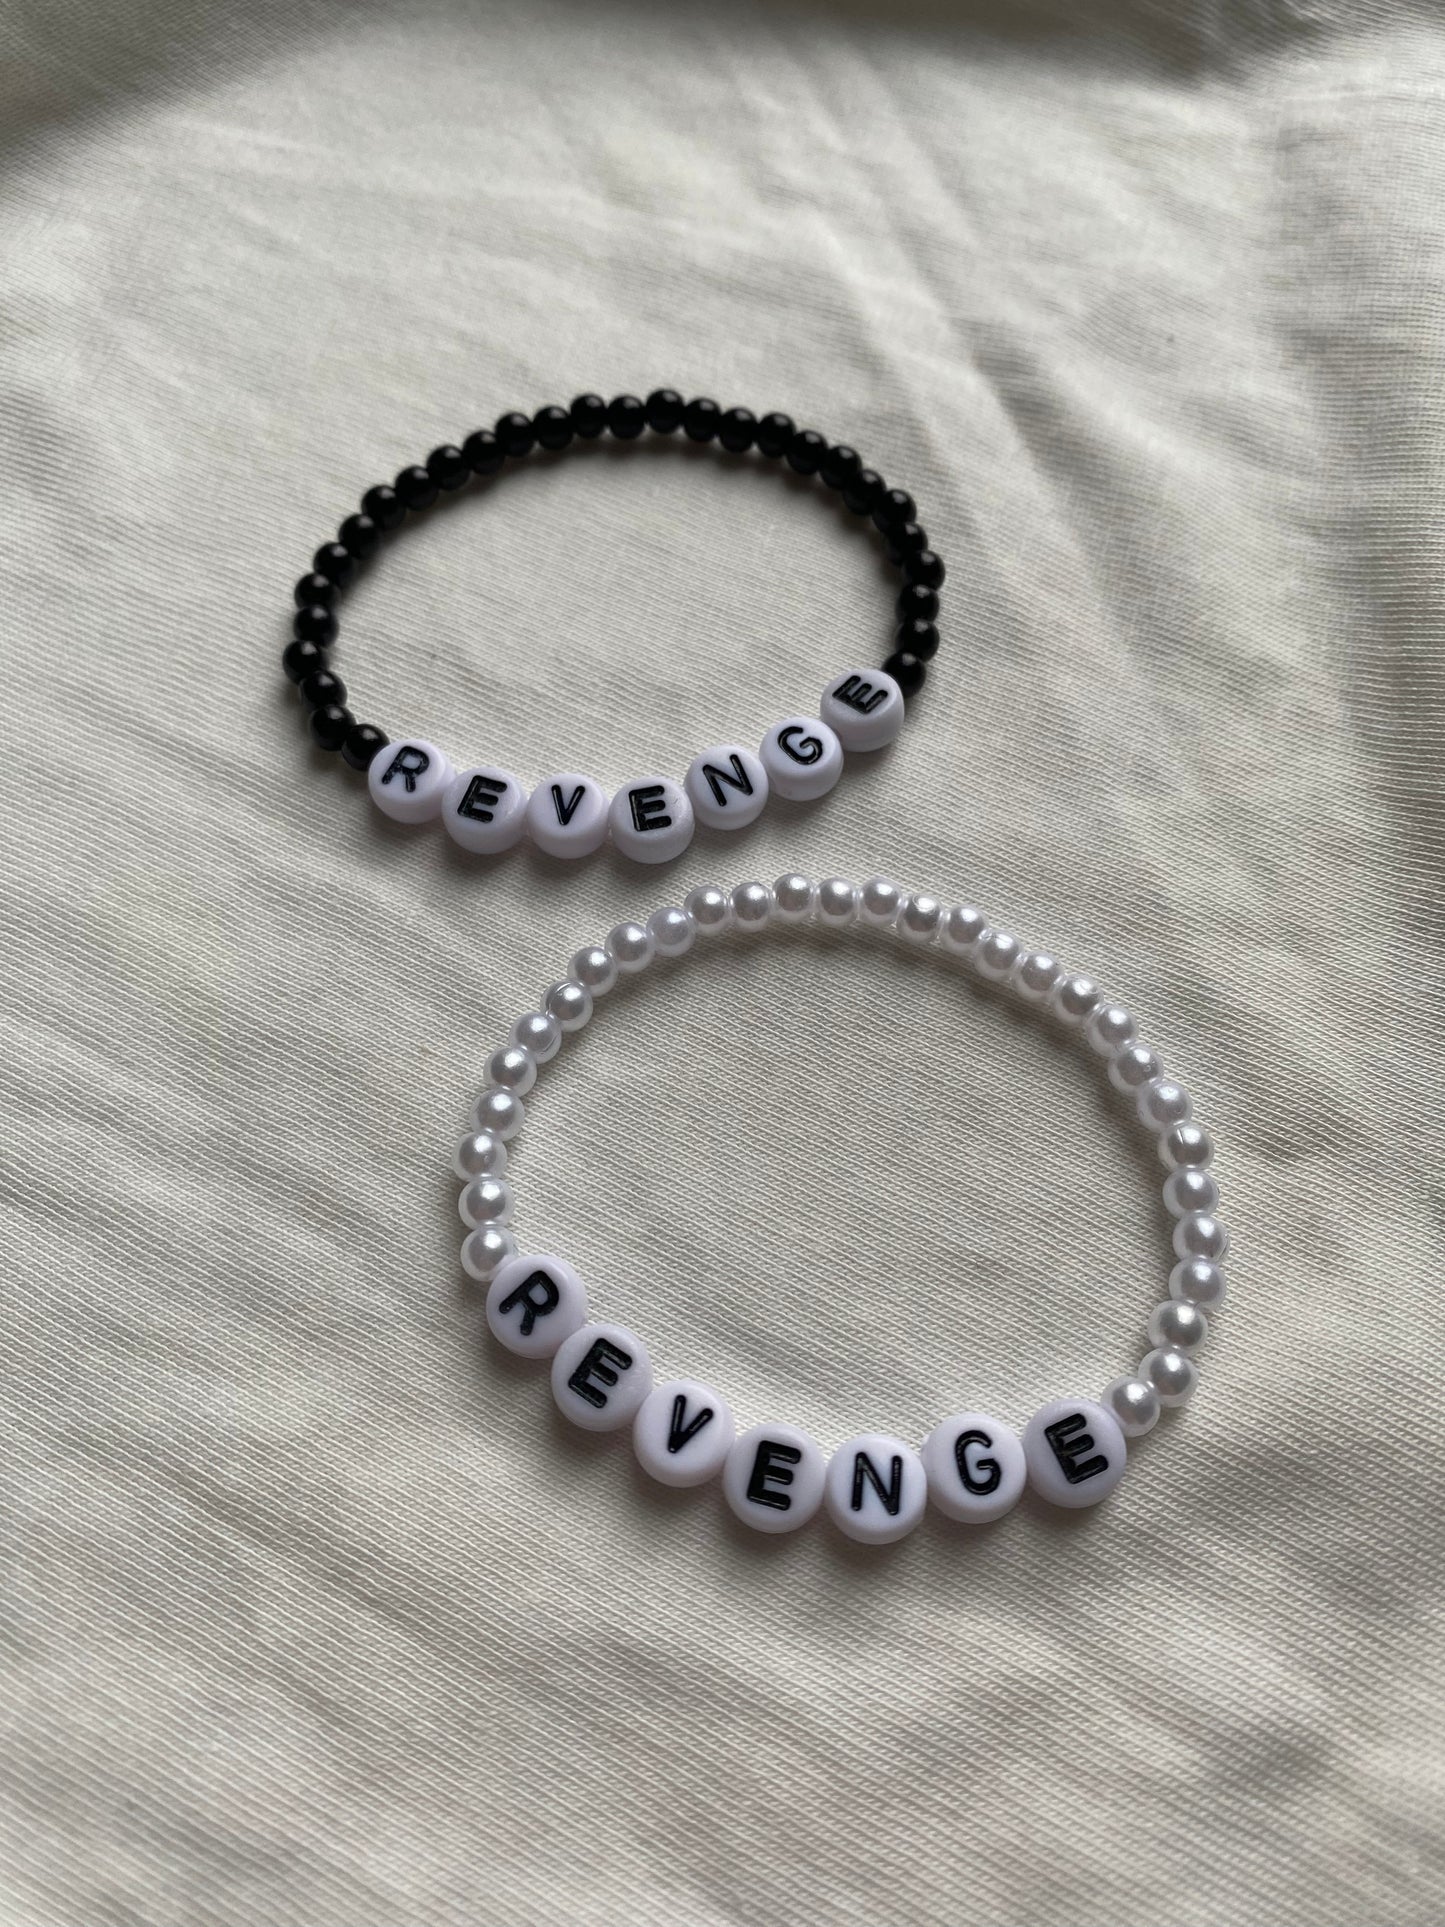 Revenge matching bracelets